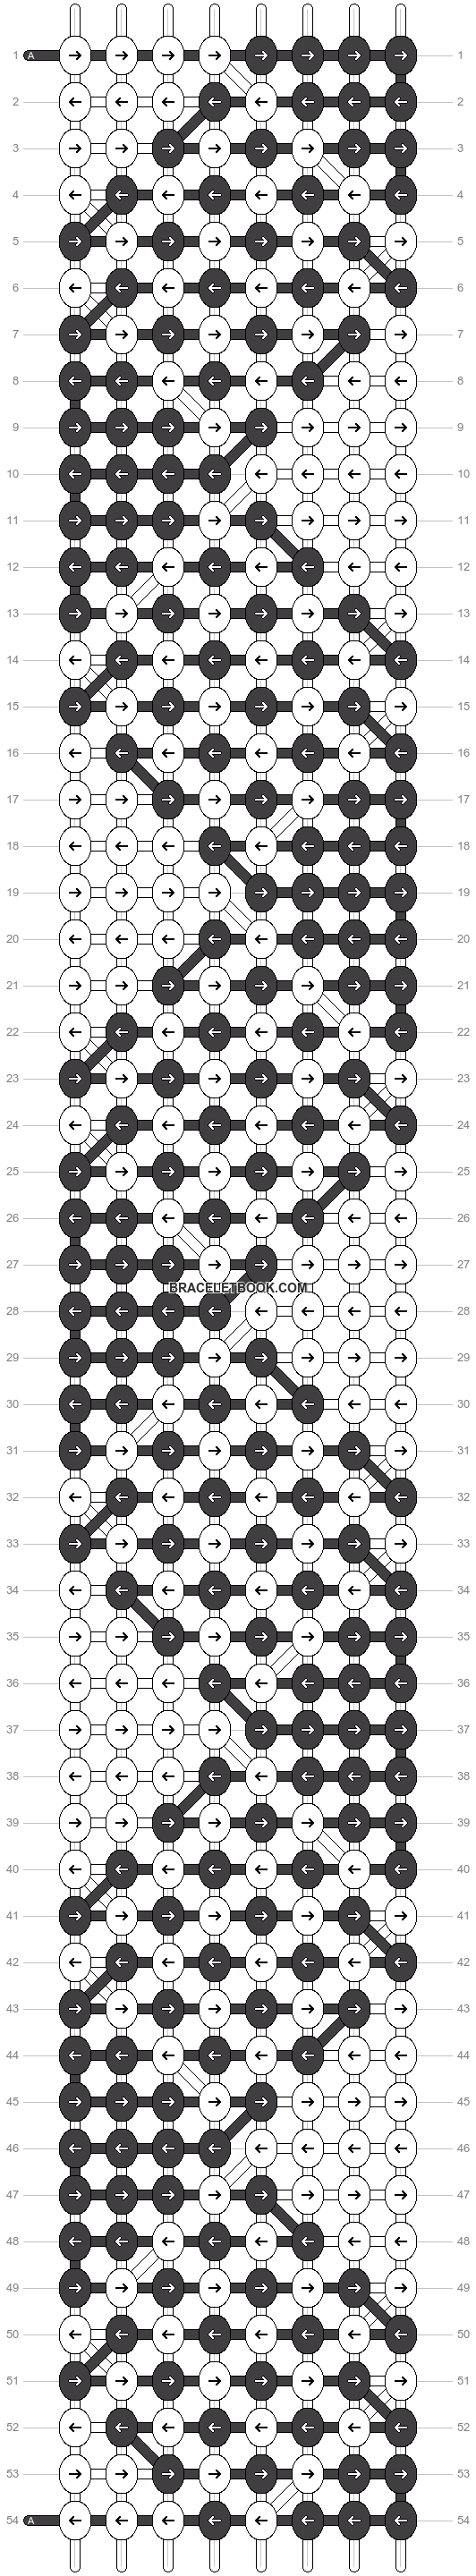 Alpha pattern #29510 variation #17476 pattern